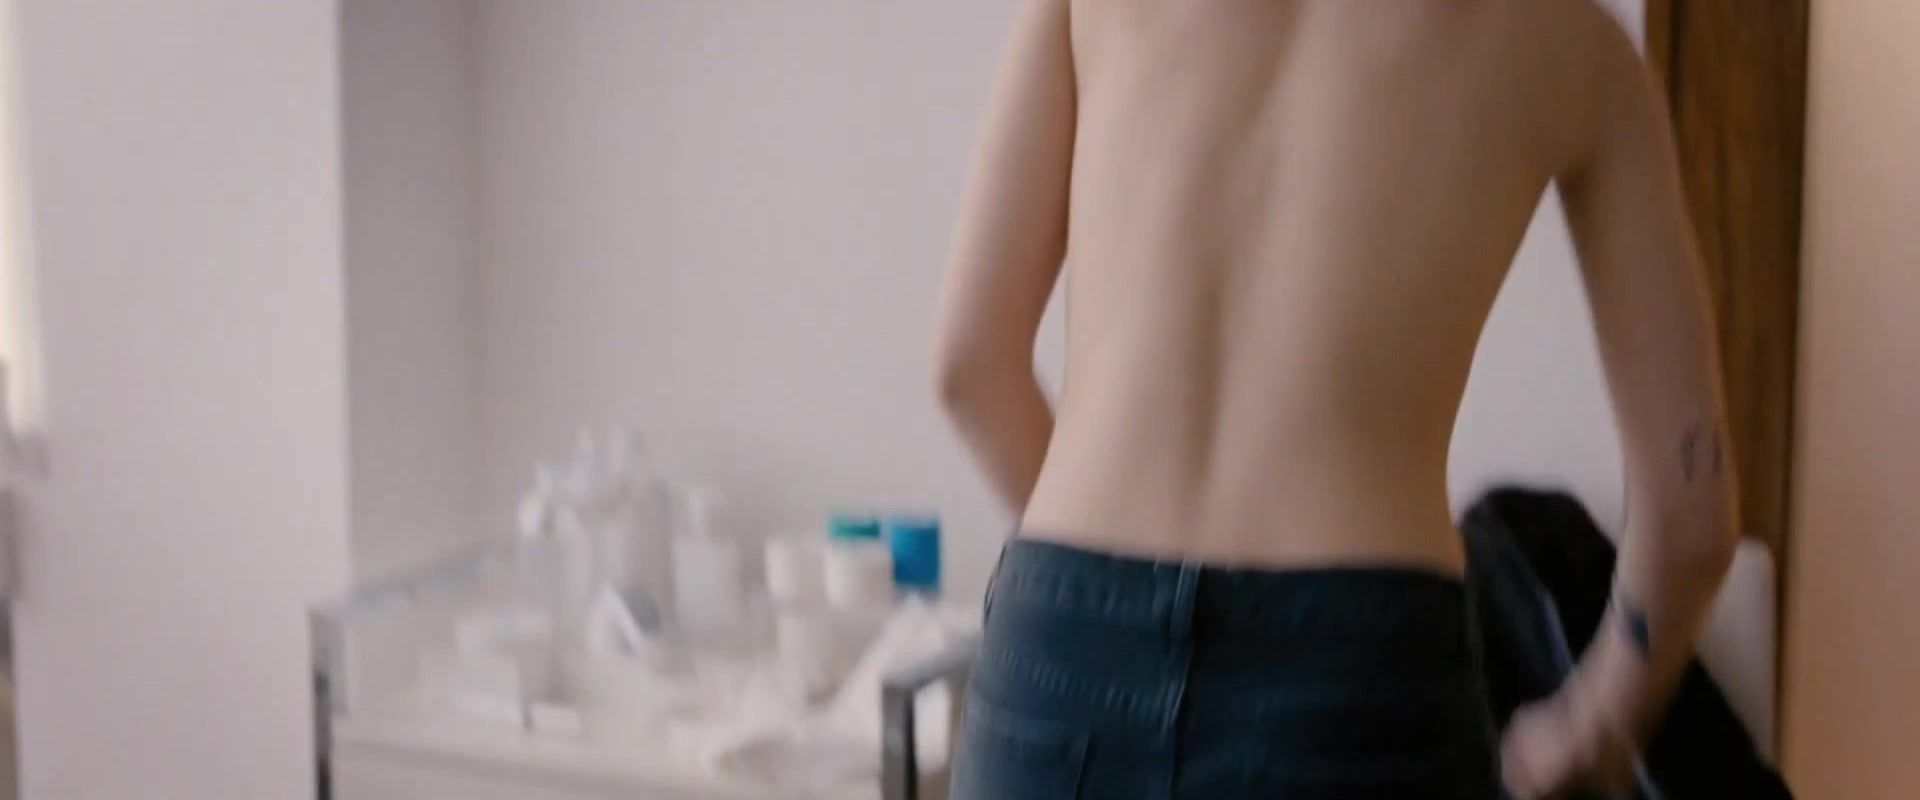 Free-Cams Kristen Stewart nude - Personal Shopper (2016) GirlfriendVideos